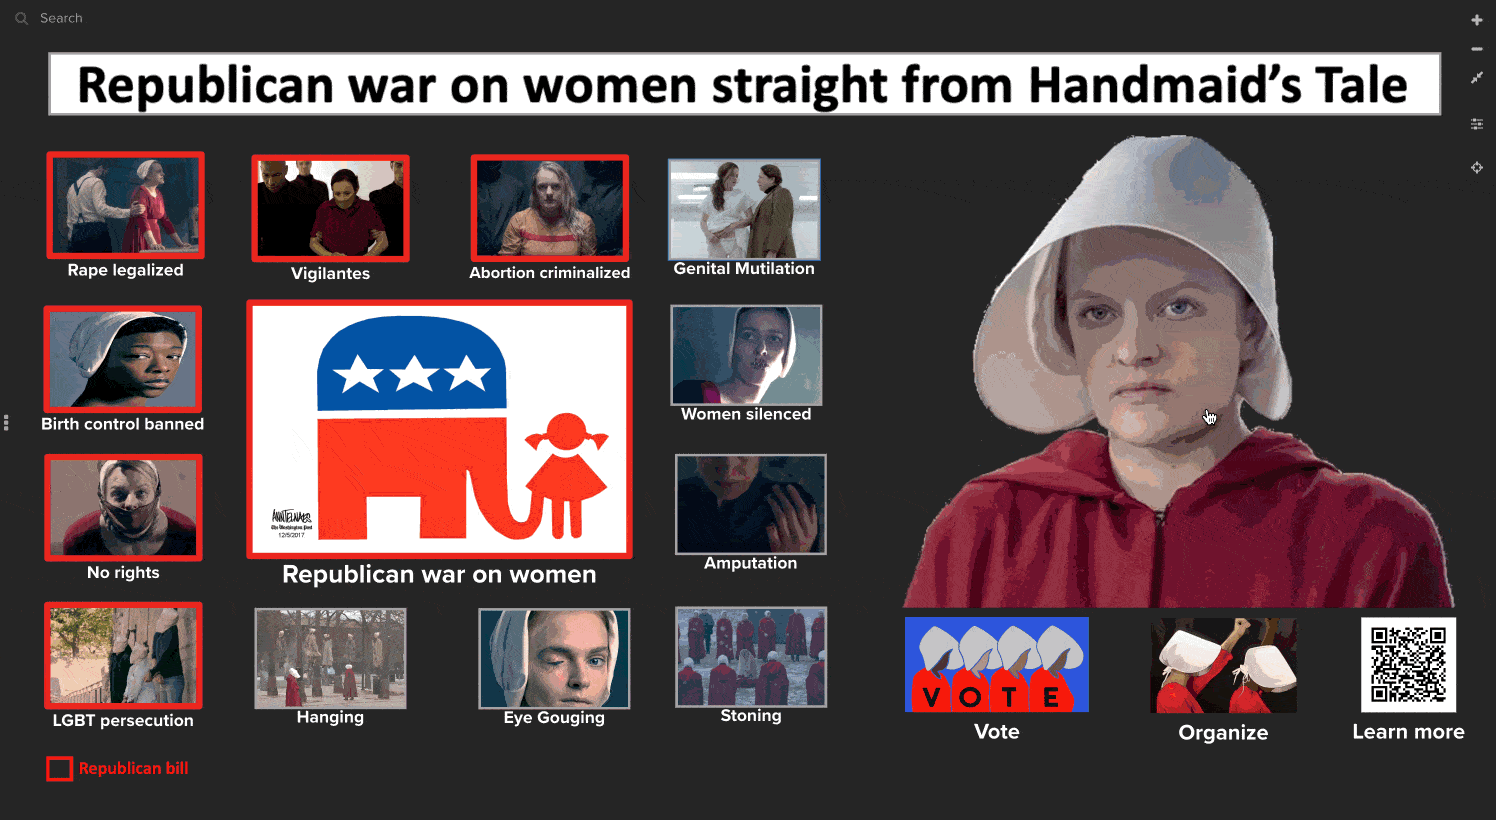 Republican war on women is straight from Handmaid's Tale